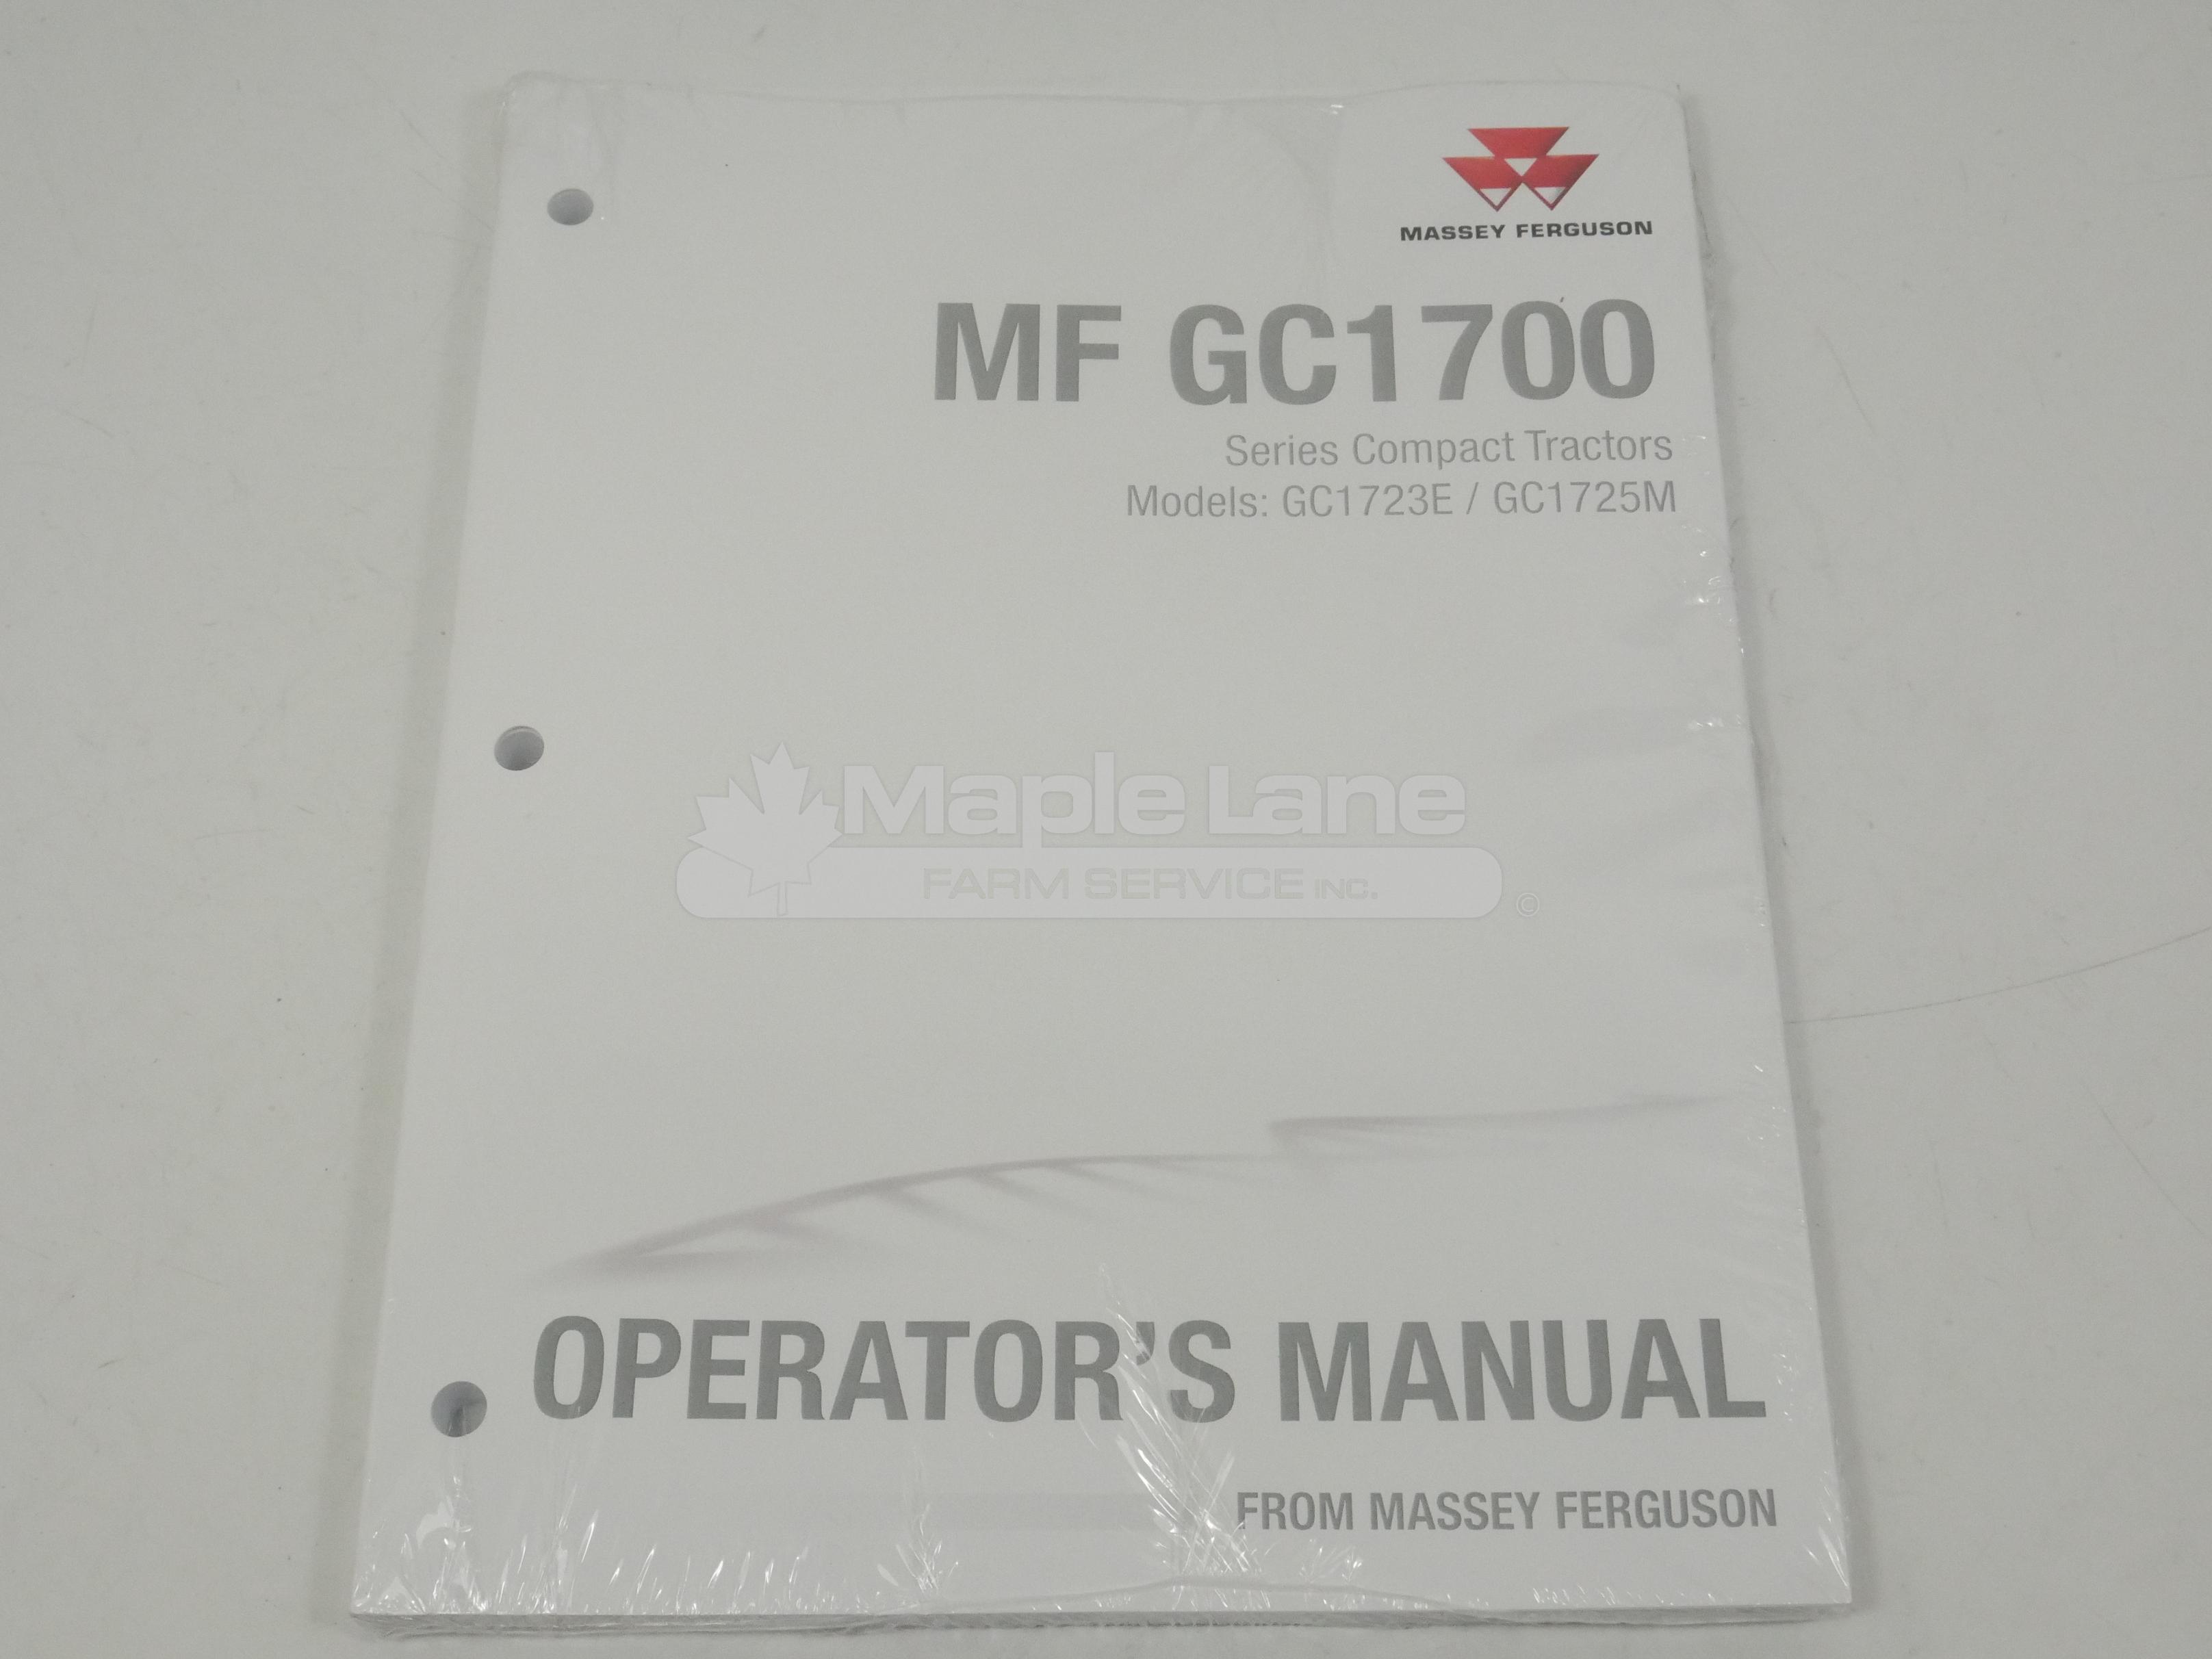 ACW715279A Operator Manual GC1700